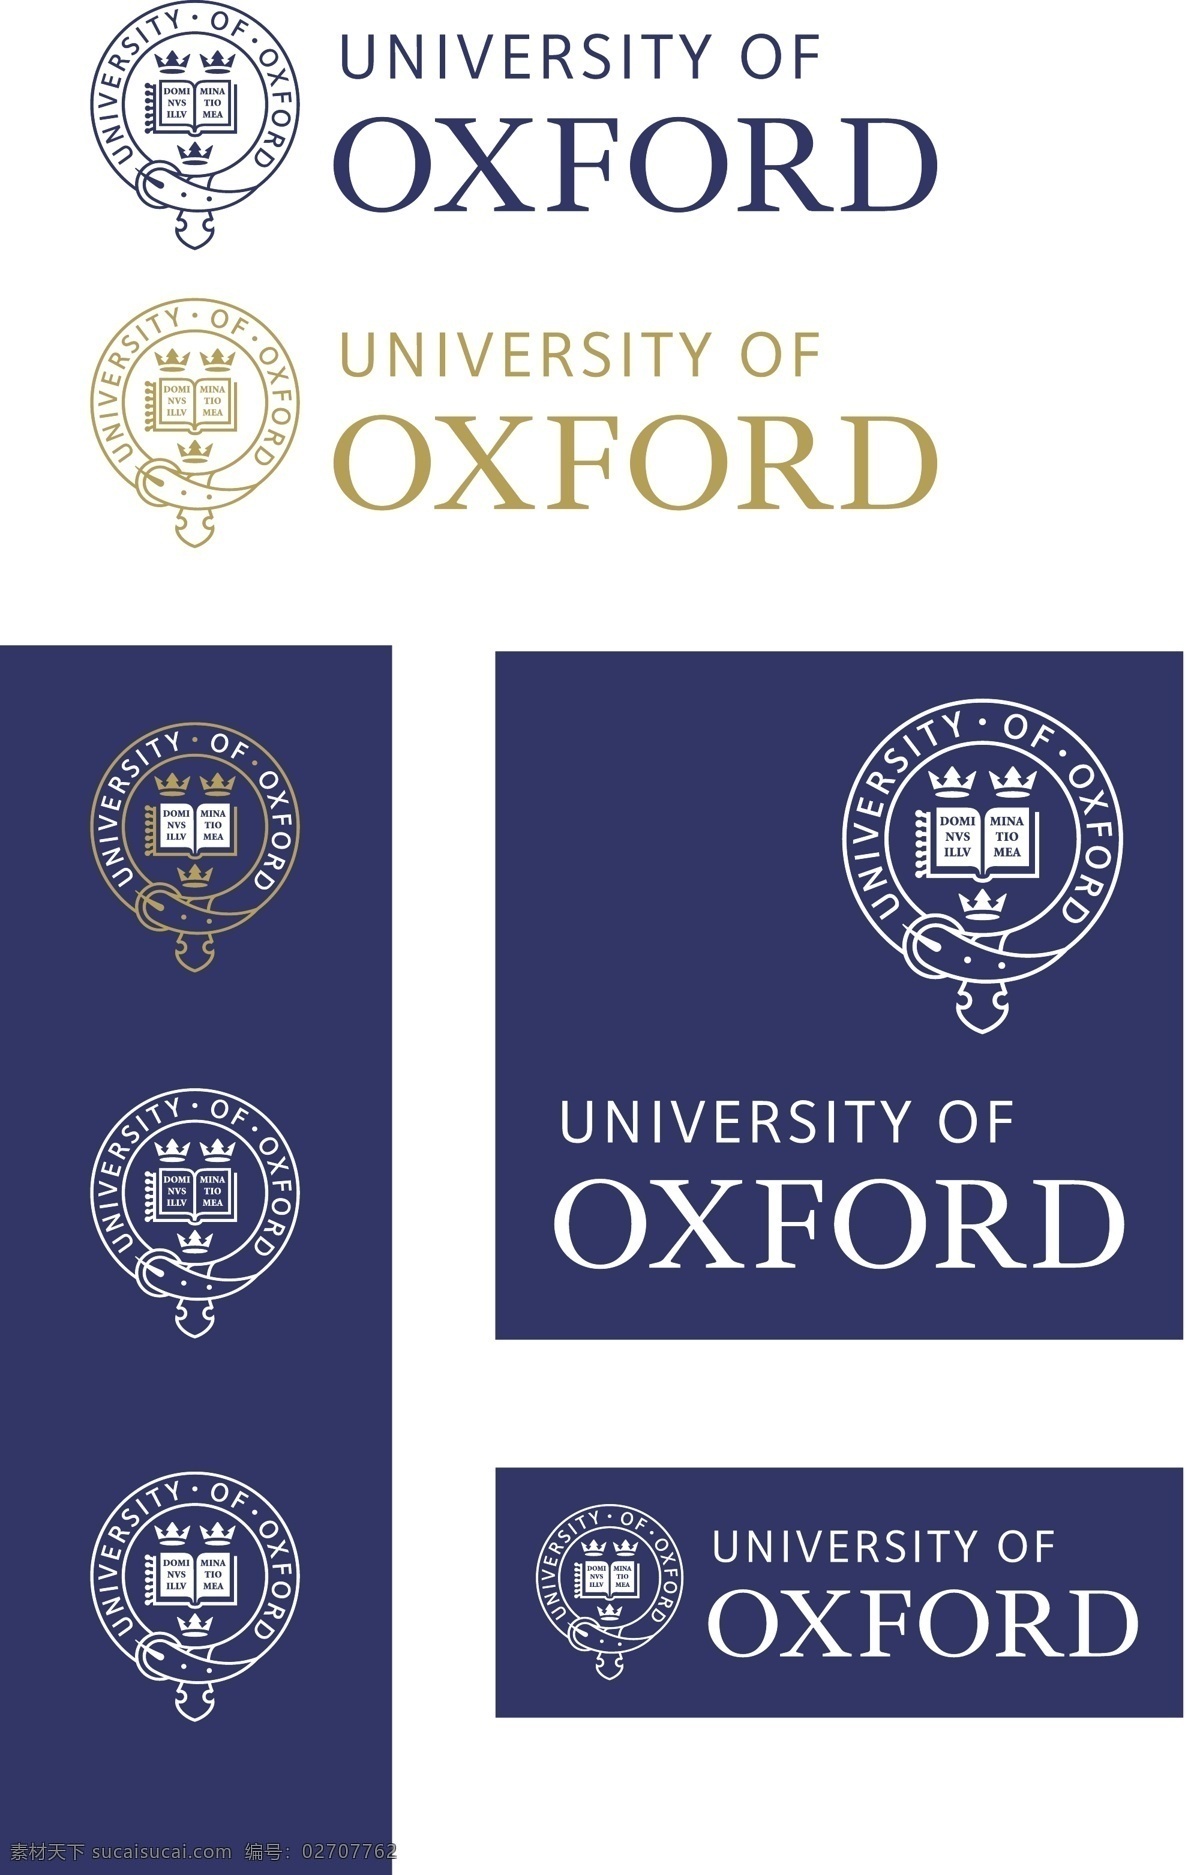 logo of 标识标志图标 企业 标志 牛津大学 university oxford mba 矢量 矢量图 其他矢量图